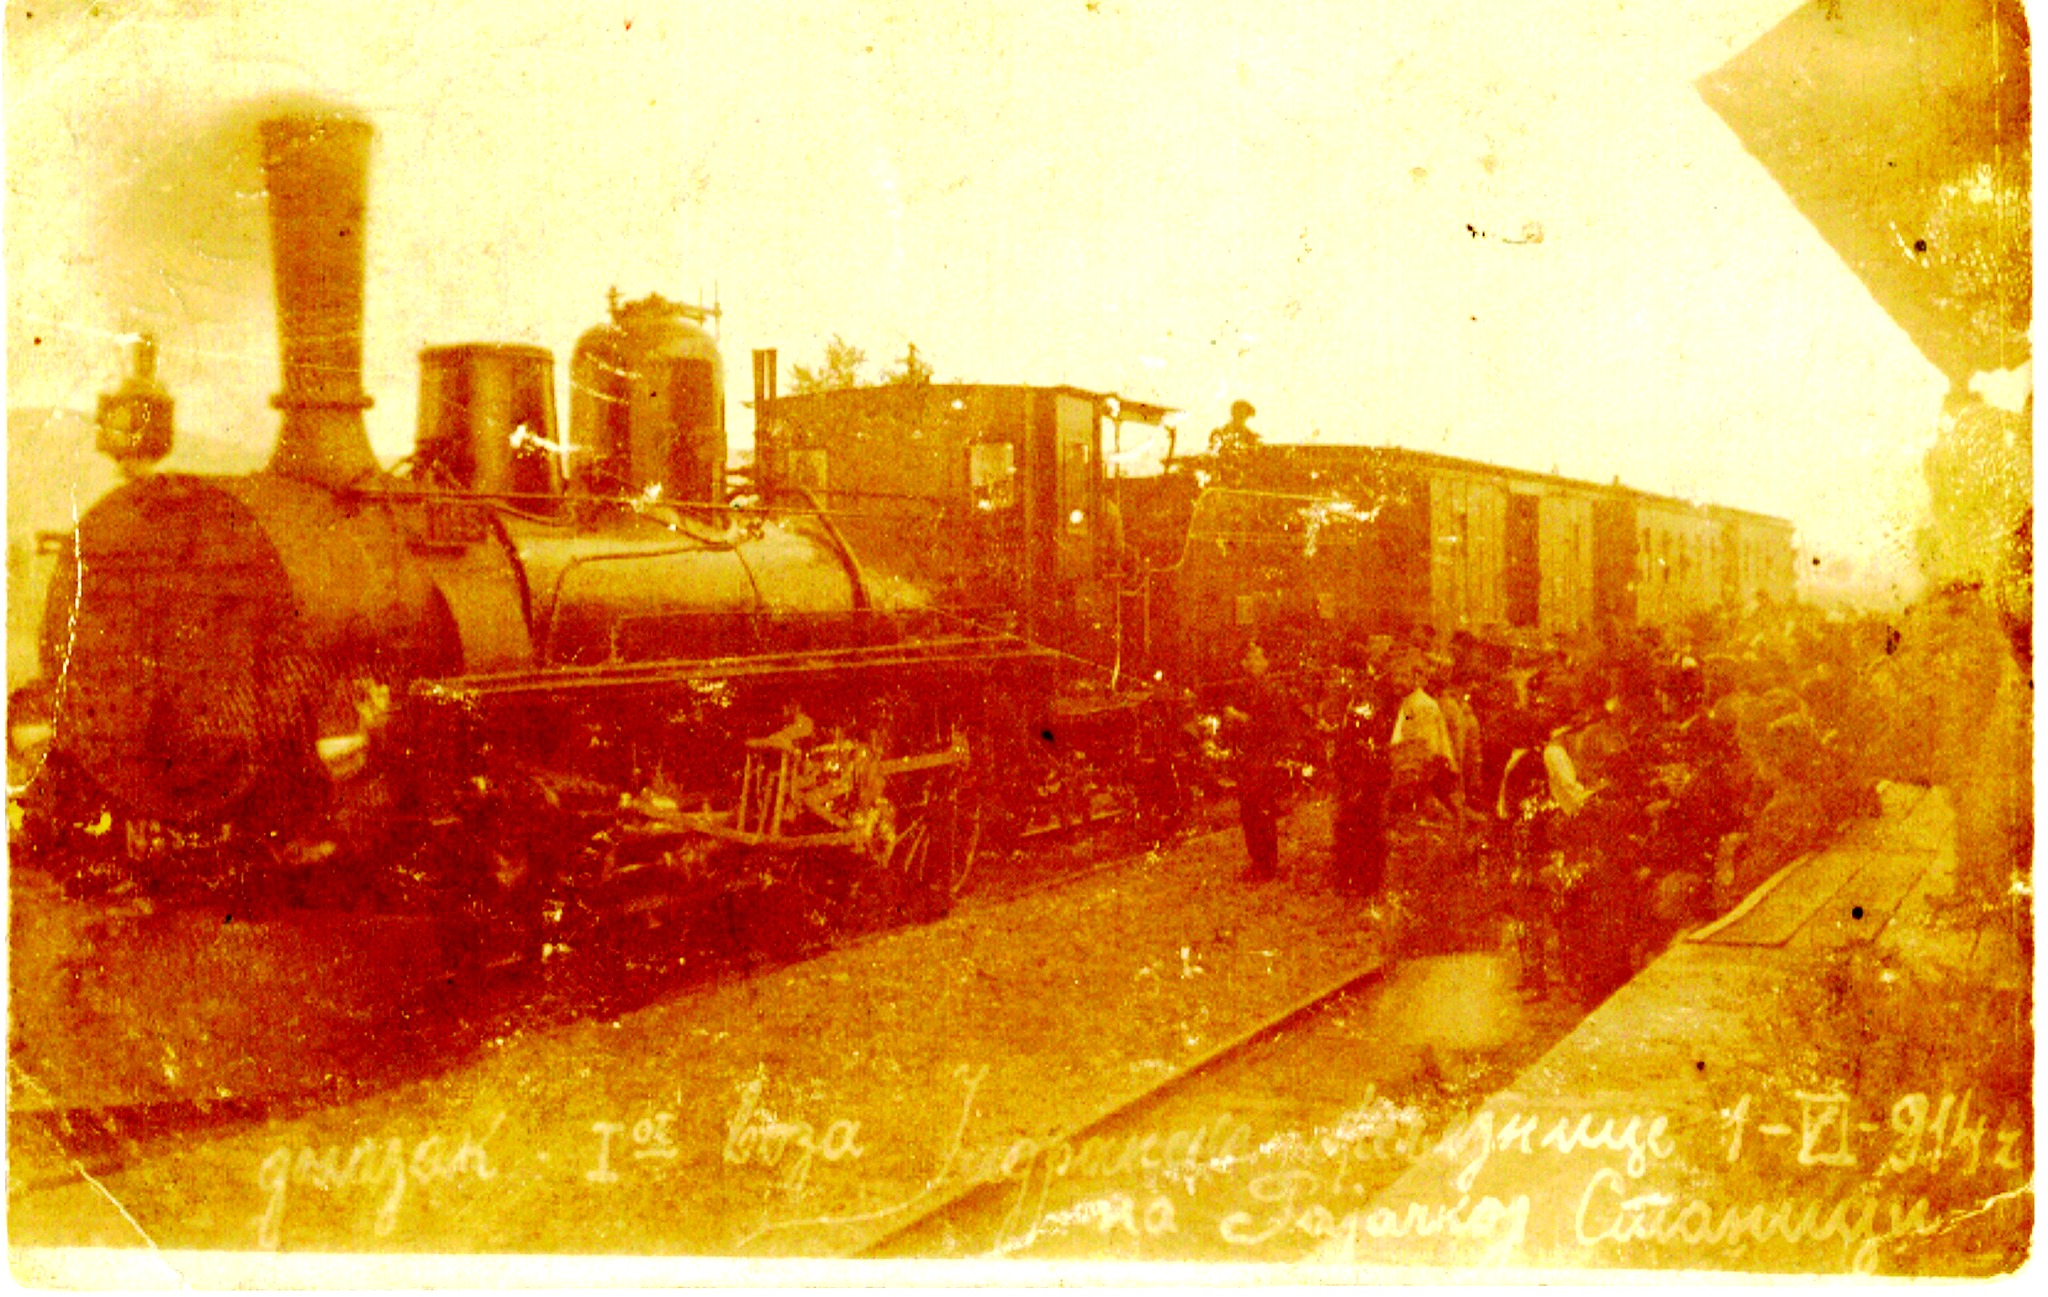 Dolazak prvog voza u Rajac, 1.VI 1914.jpg